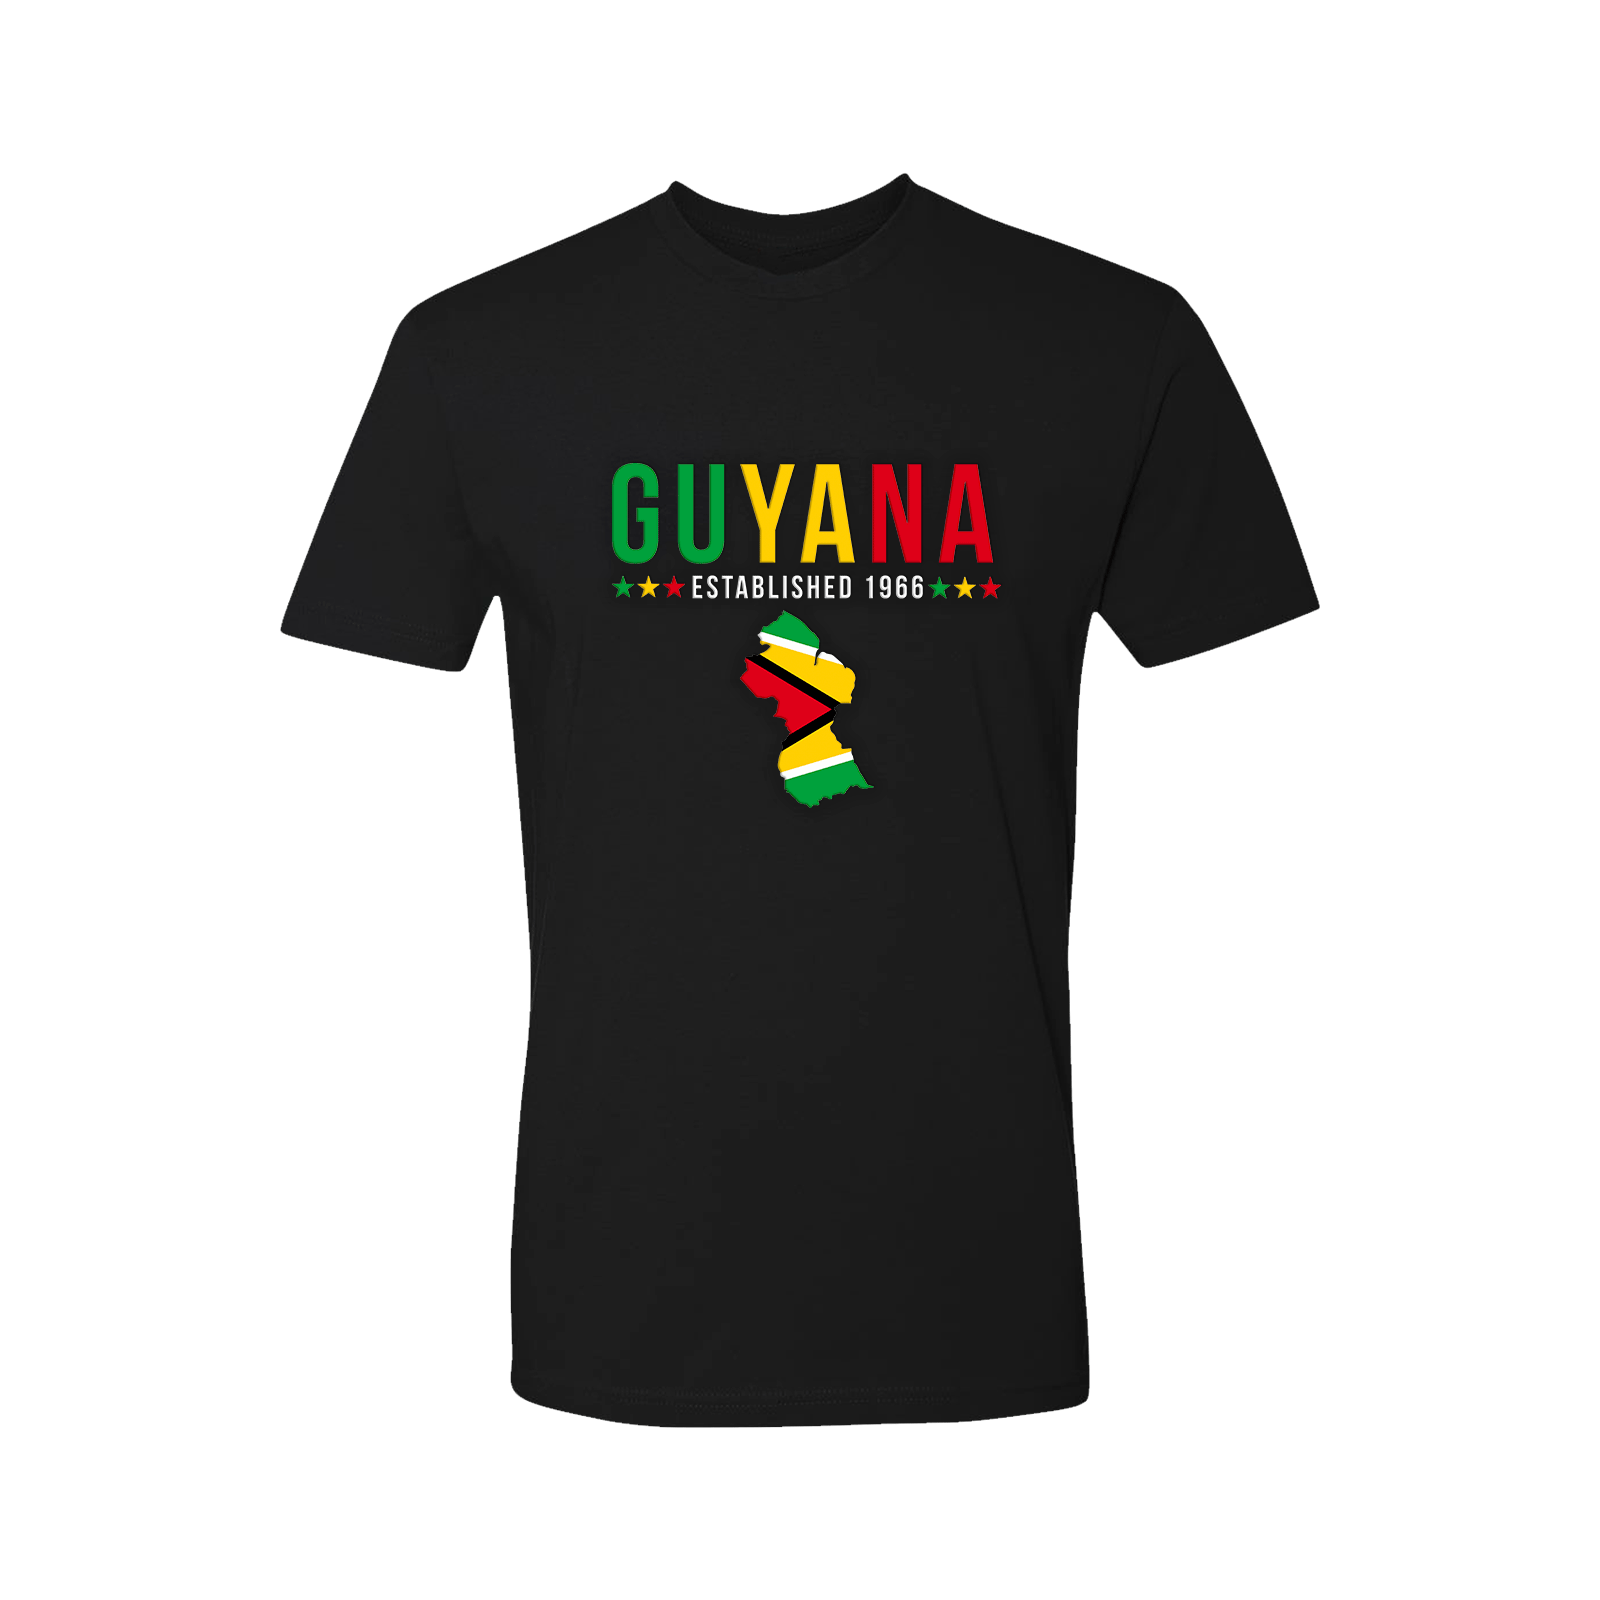 Guyana Short Sleeve Shirt - Adult